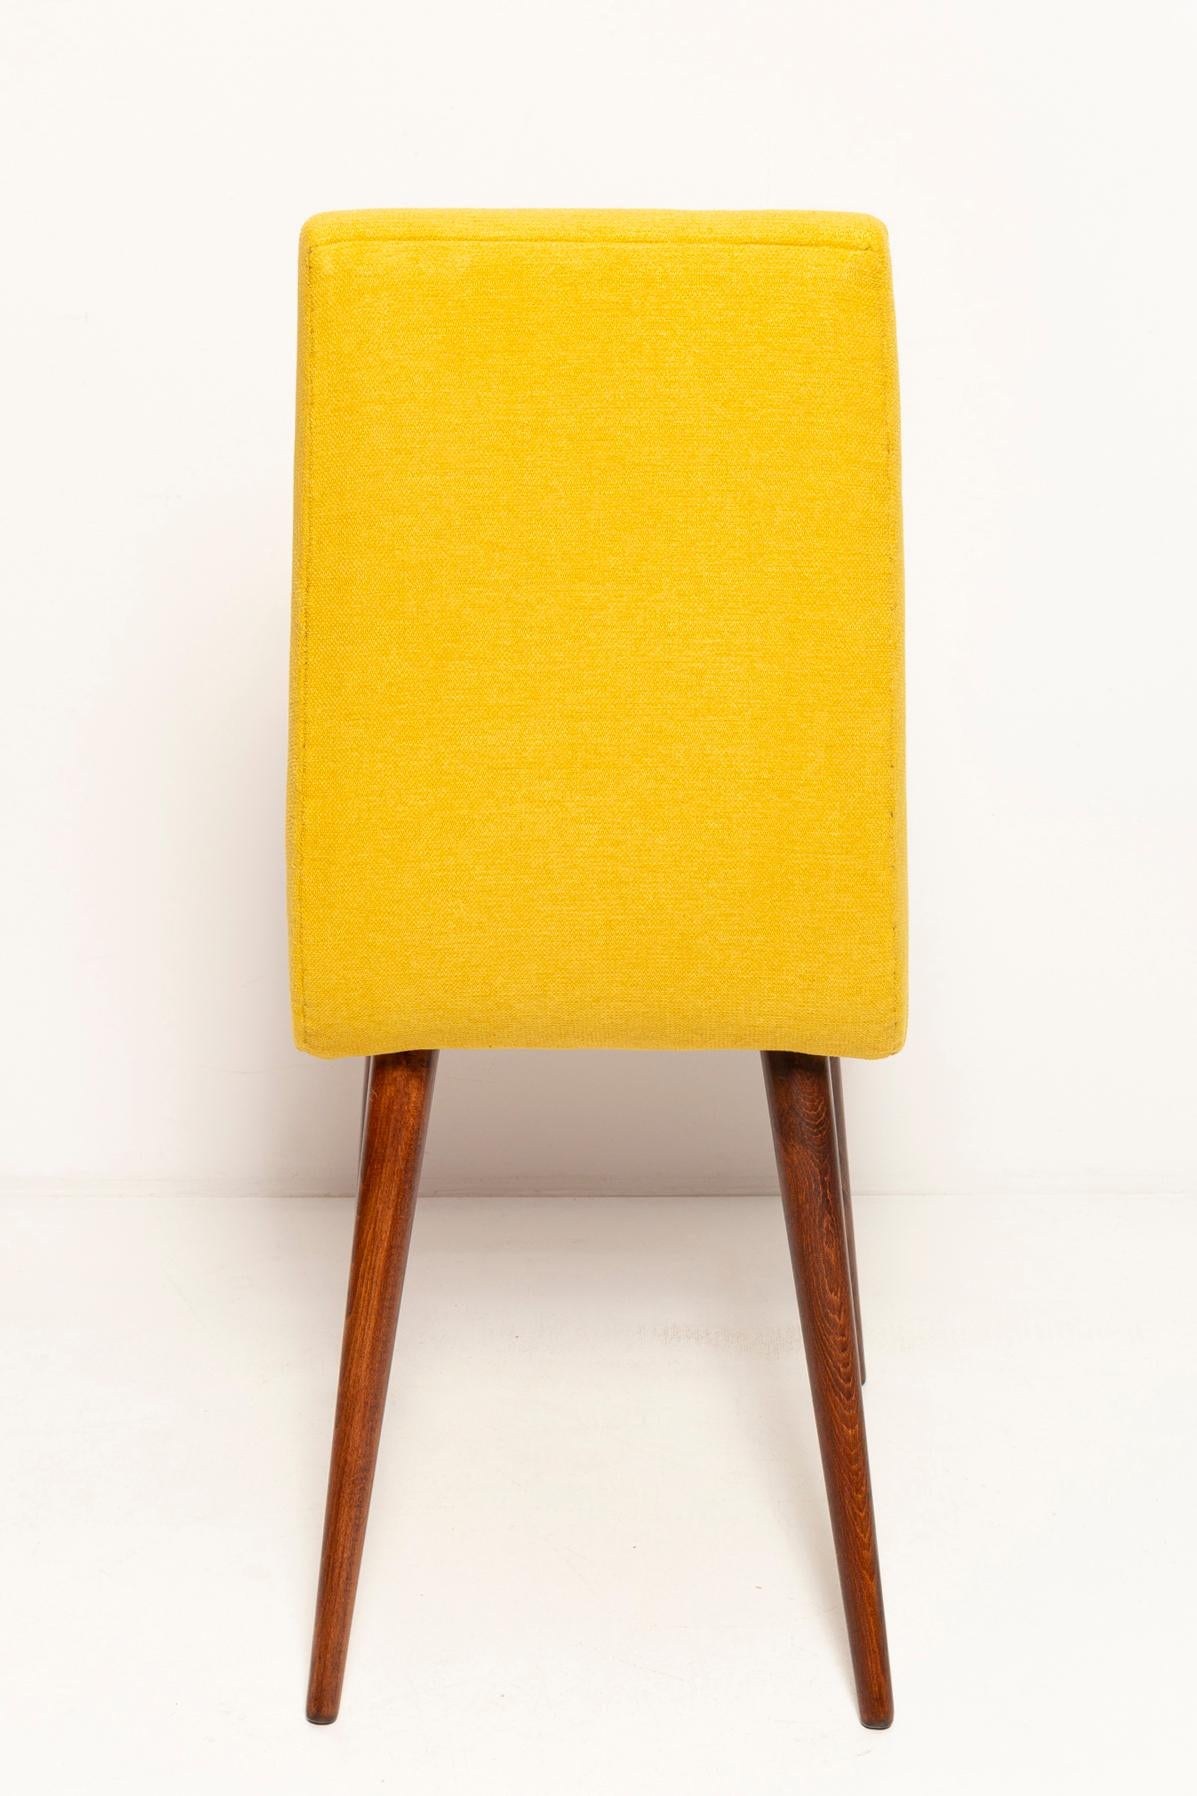 Midcentury Mustard Yellow Wool Chair, Rajmund Halas, Europe, 1960s For Sale 4